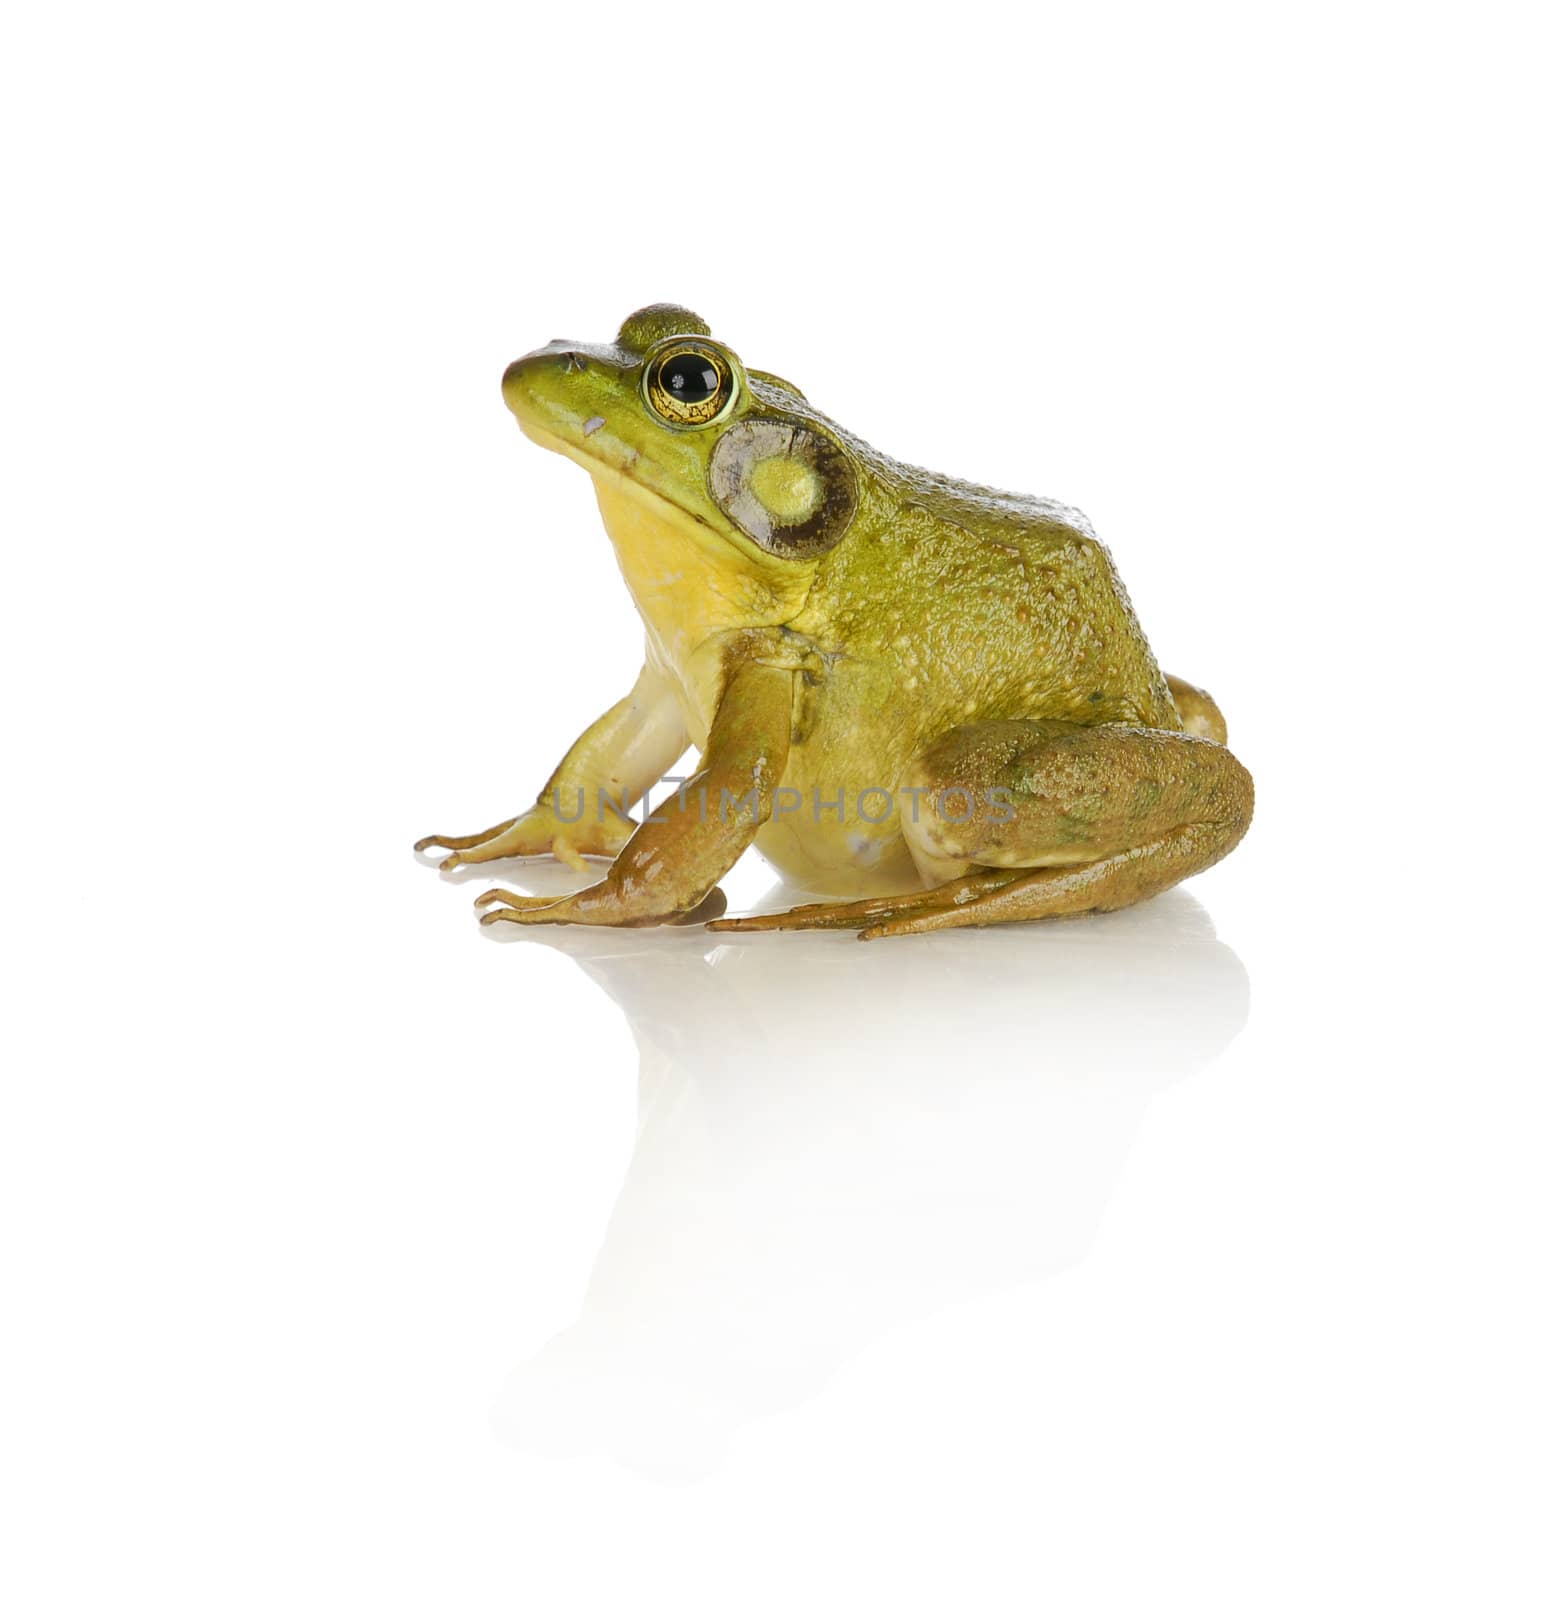 bullfrog species from southwestern ontario - studio shot isolated